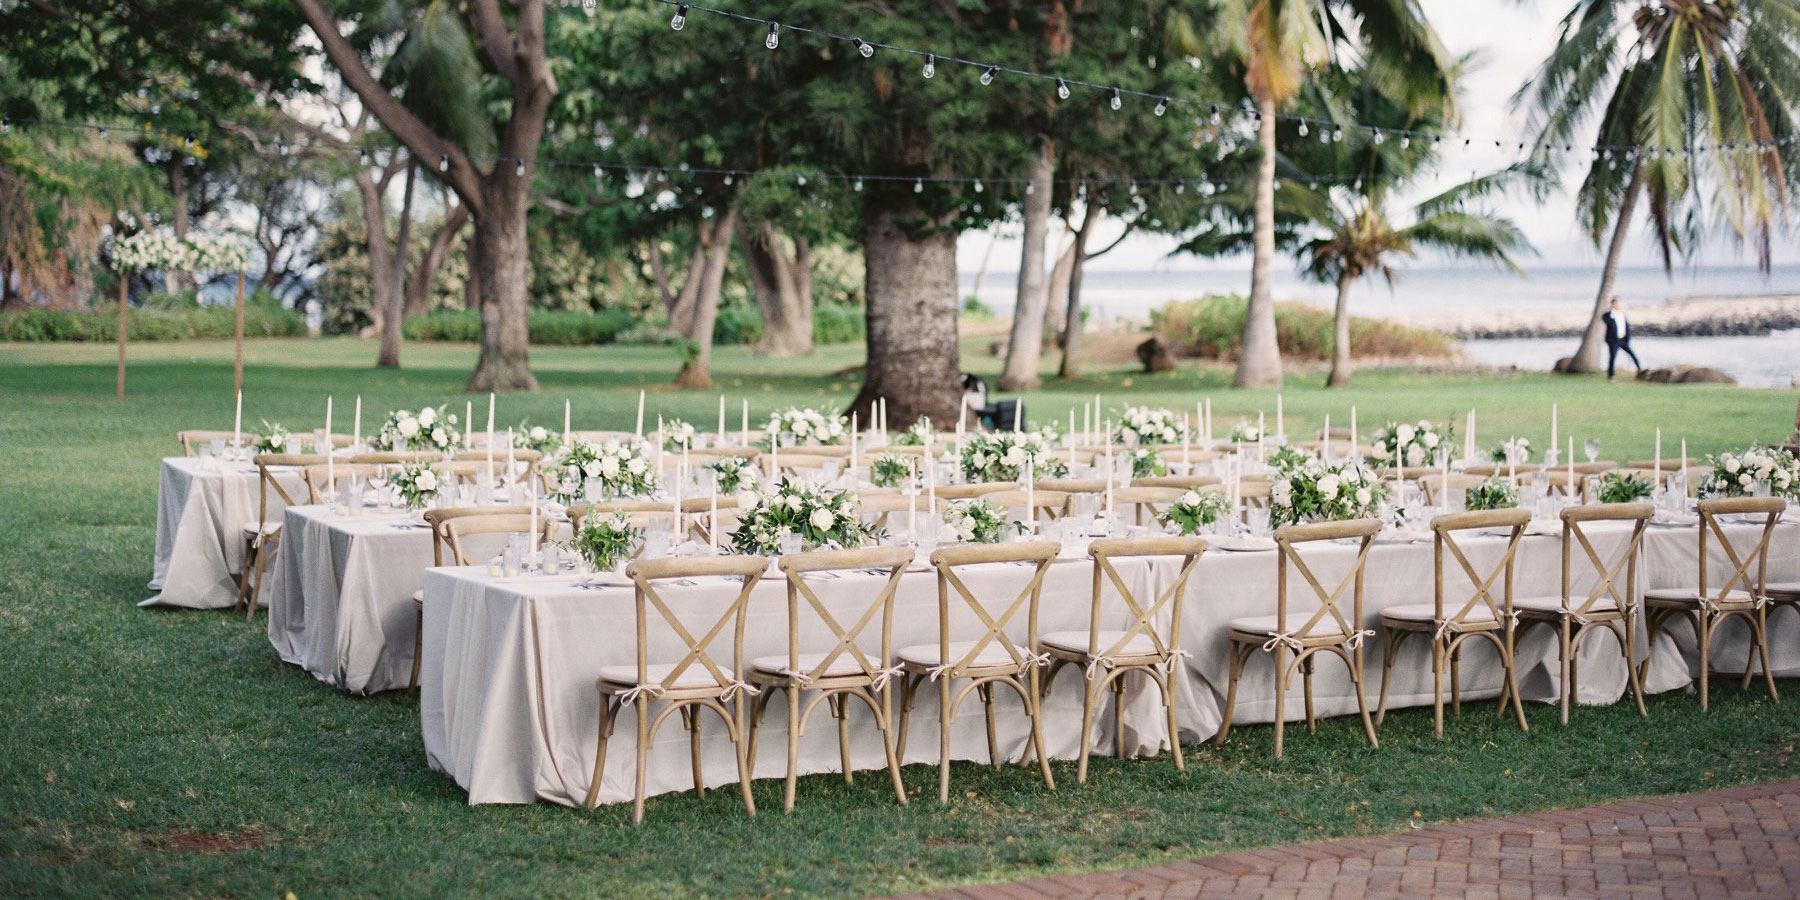 Olowalu Plantation House Top 10 Wedding Locations in Hawaii - 2